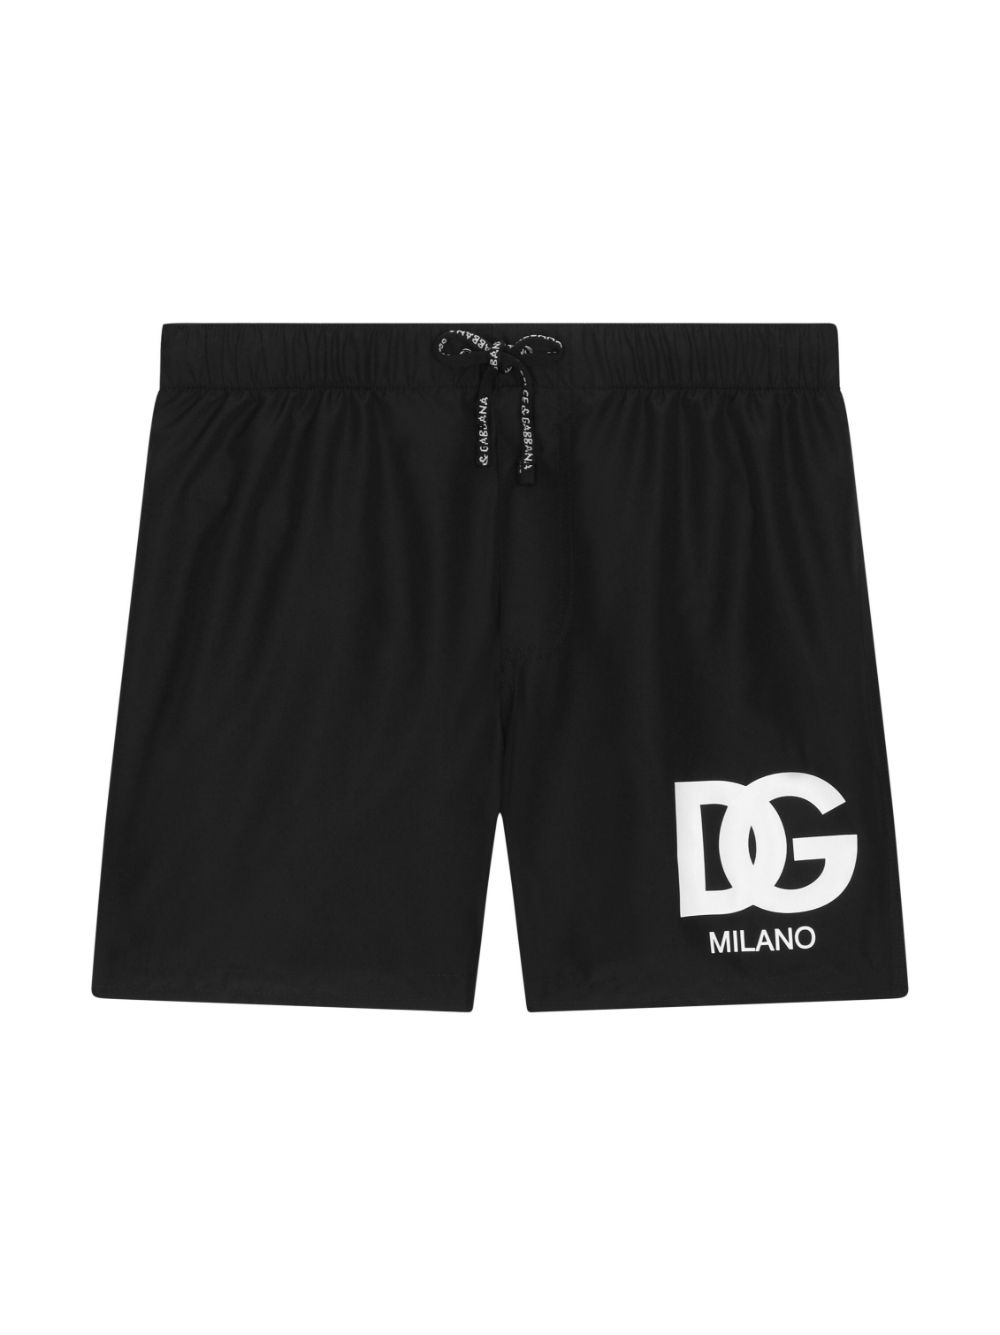 Black swim shorts for boys with logo